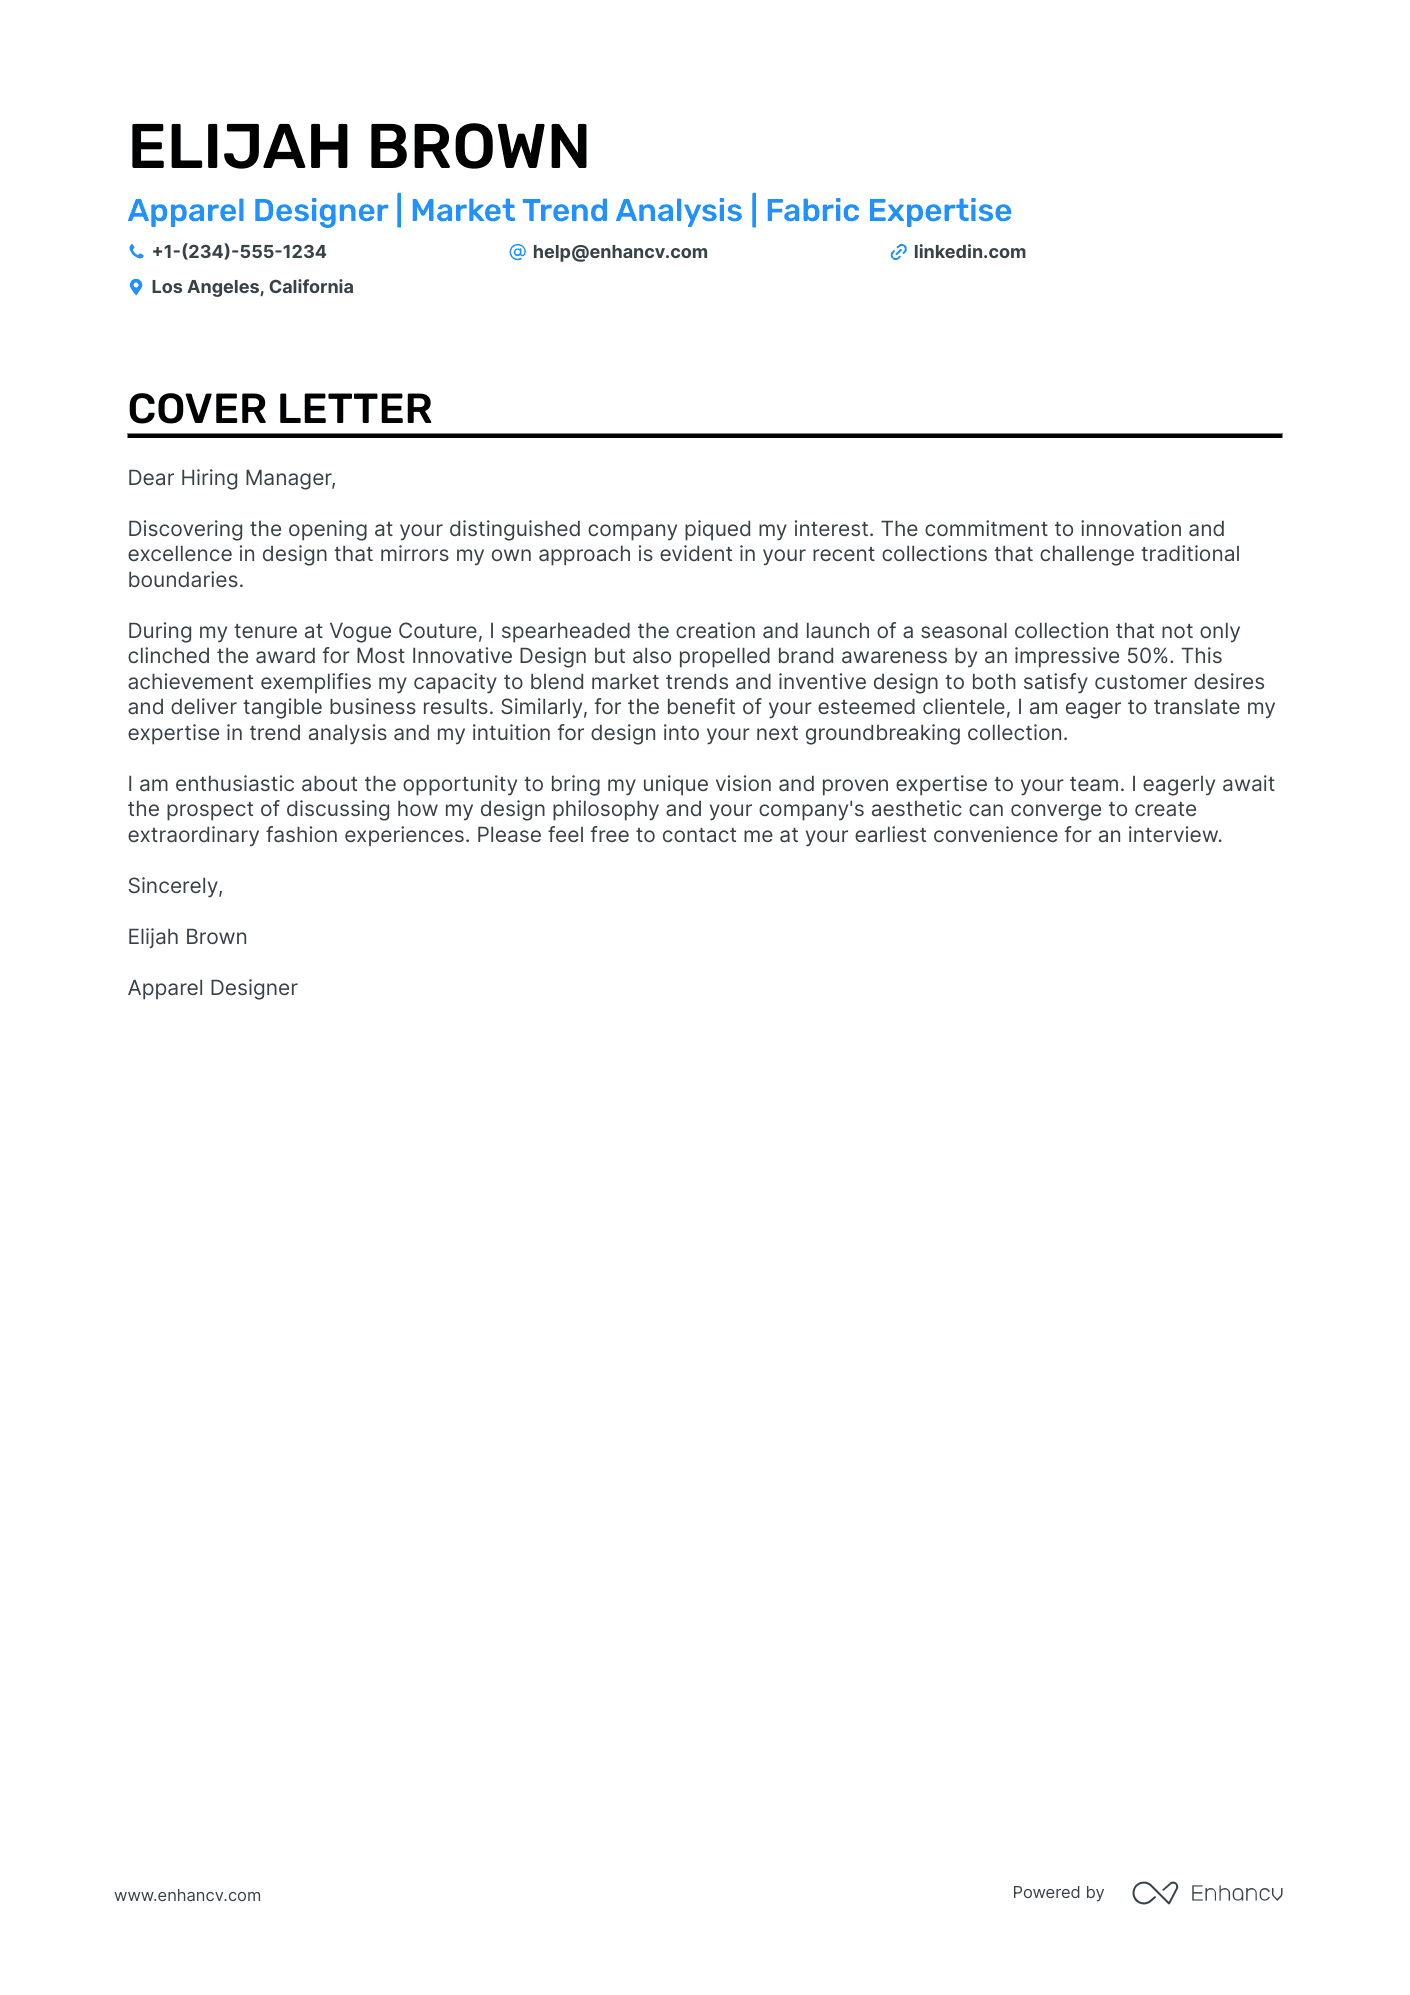 Apparel Designer cover letter